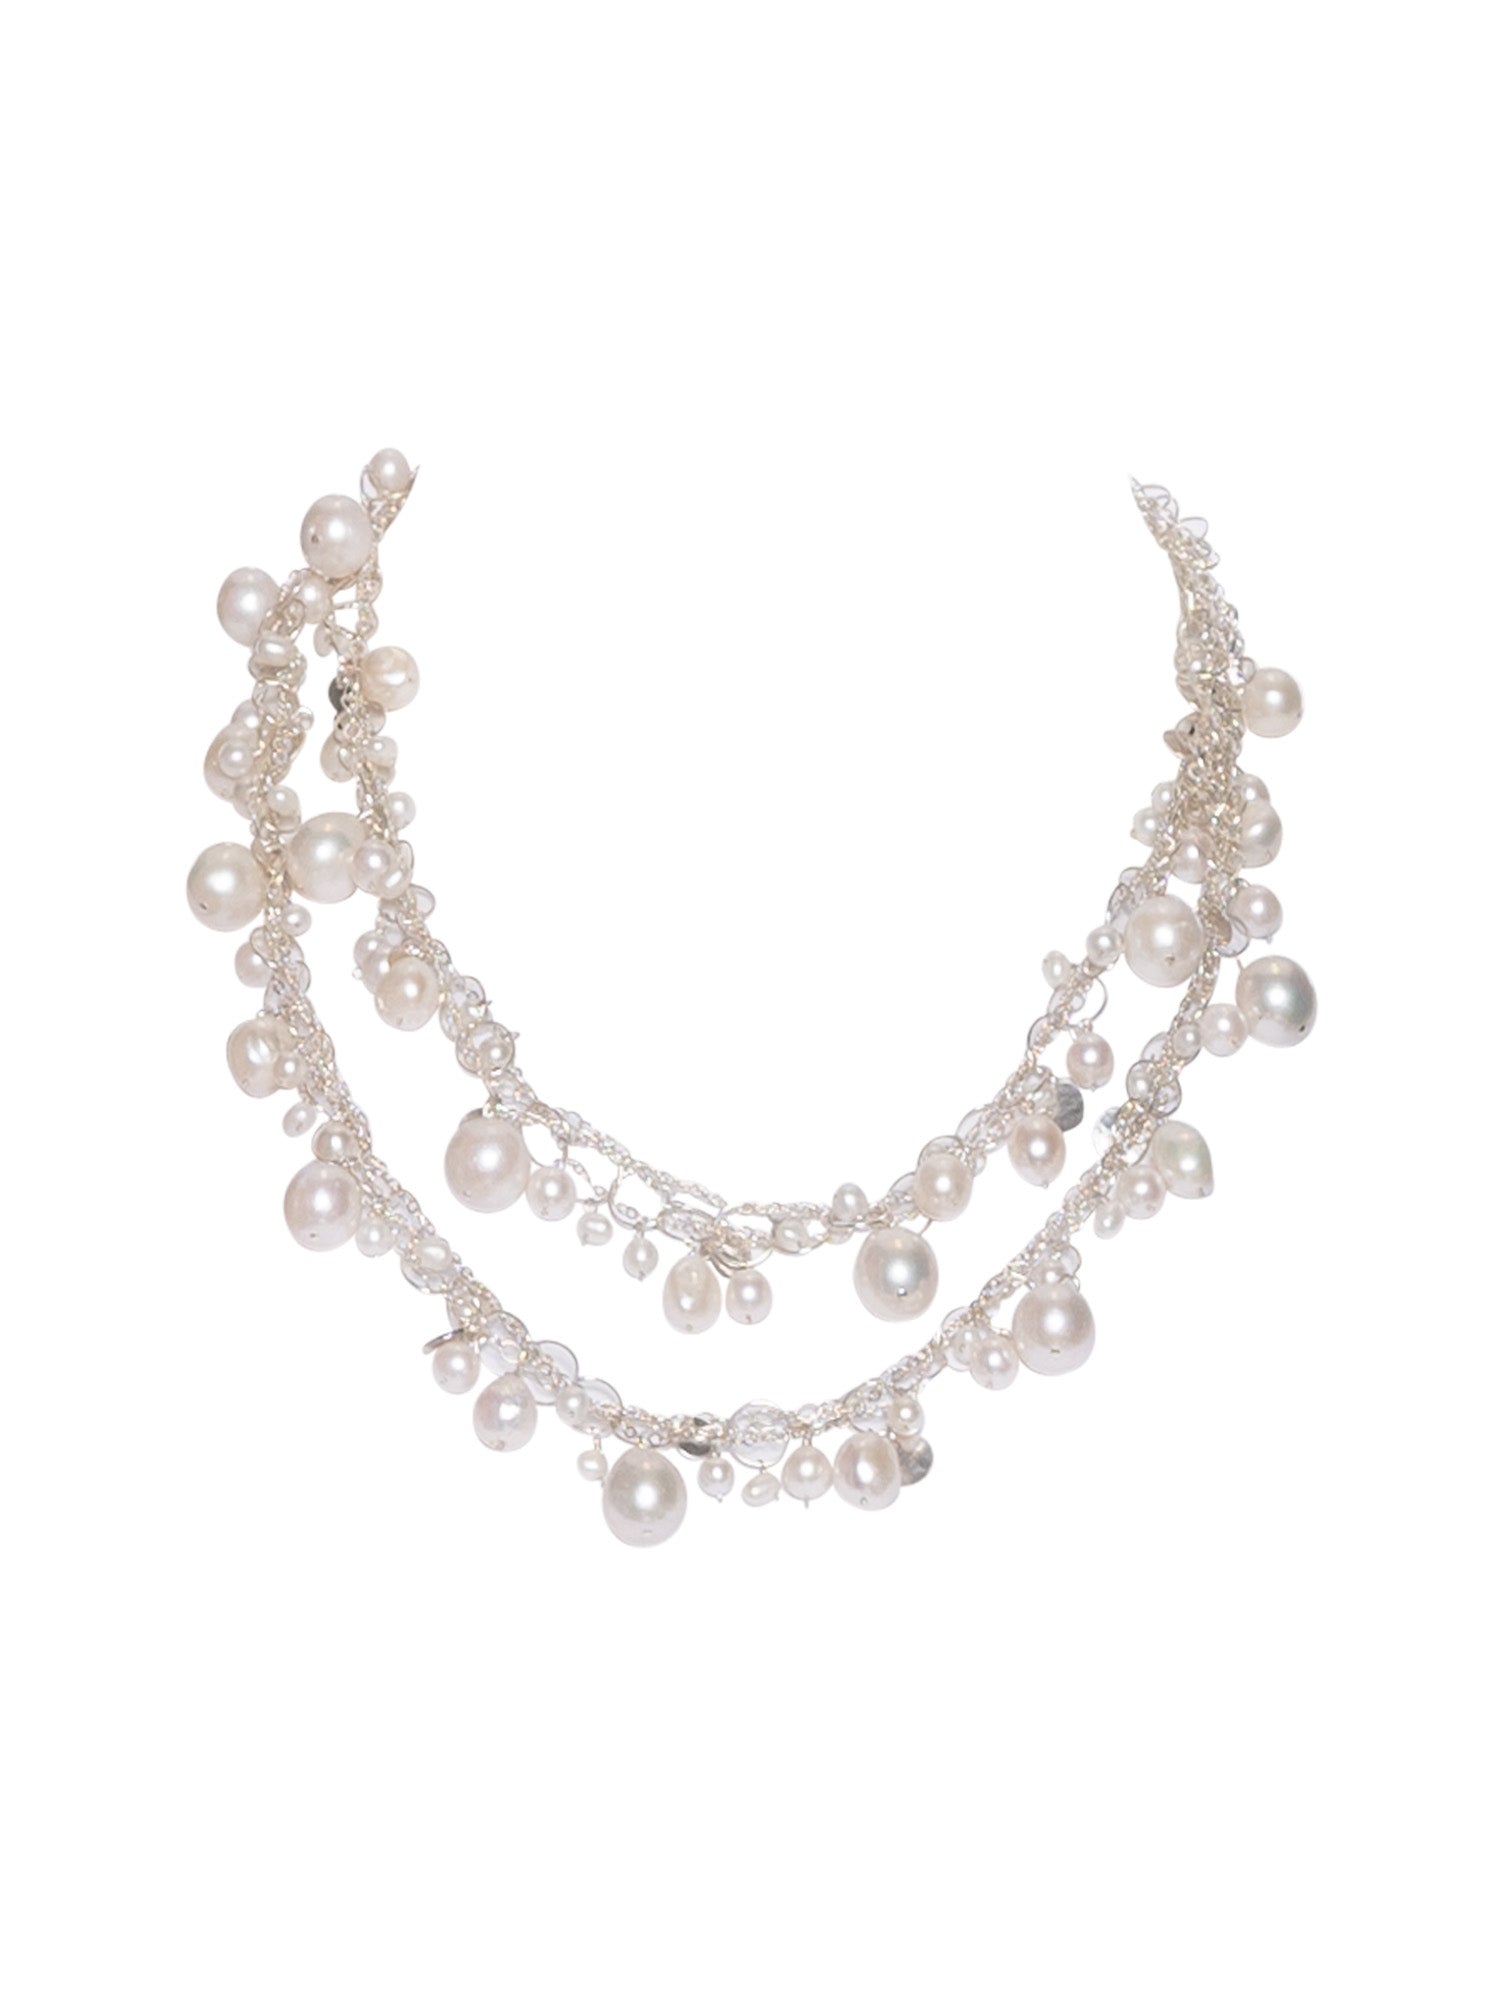 Mabel Chong Venus Pearls & Charms Necklace